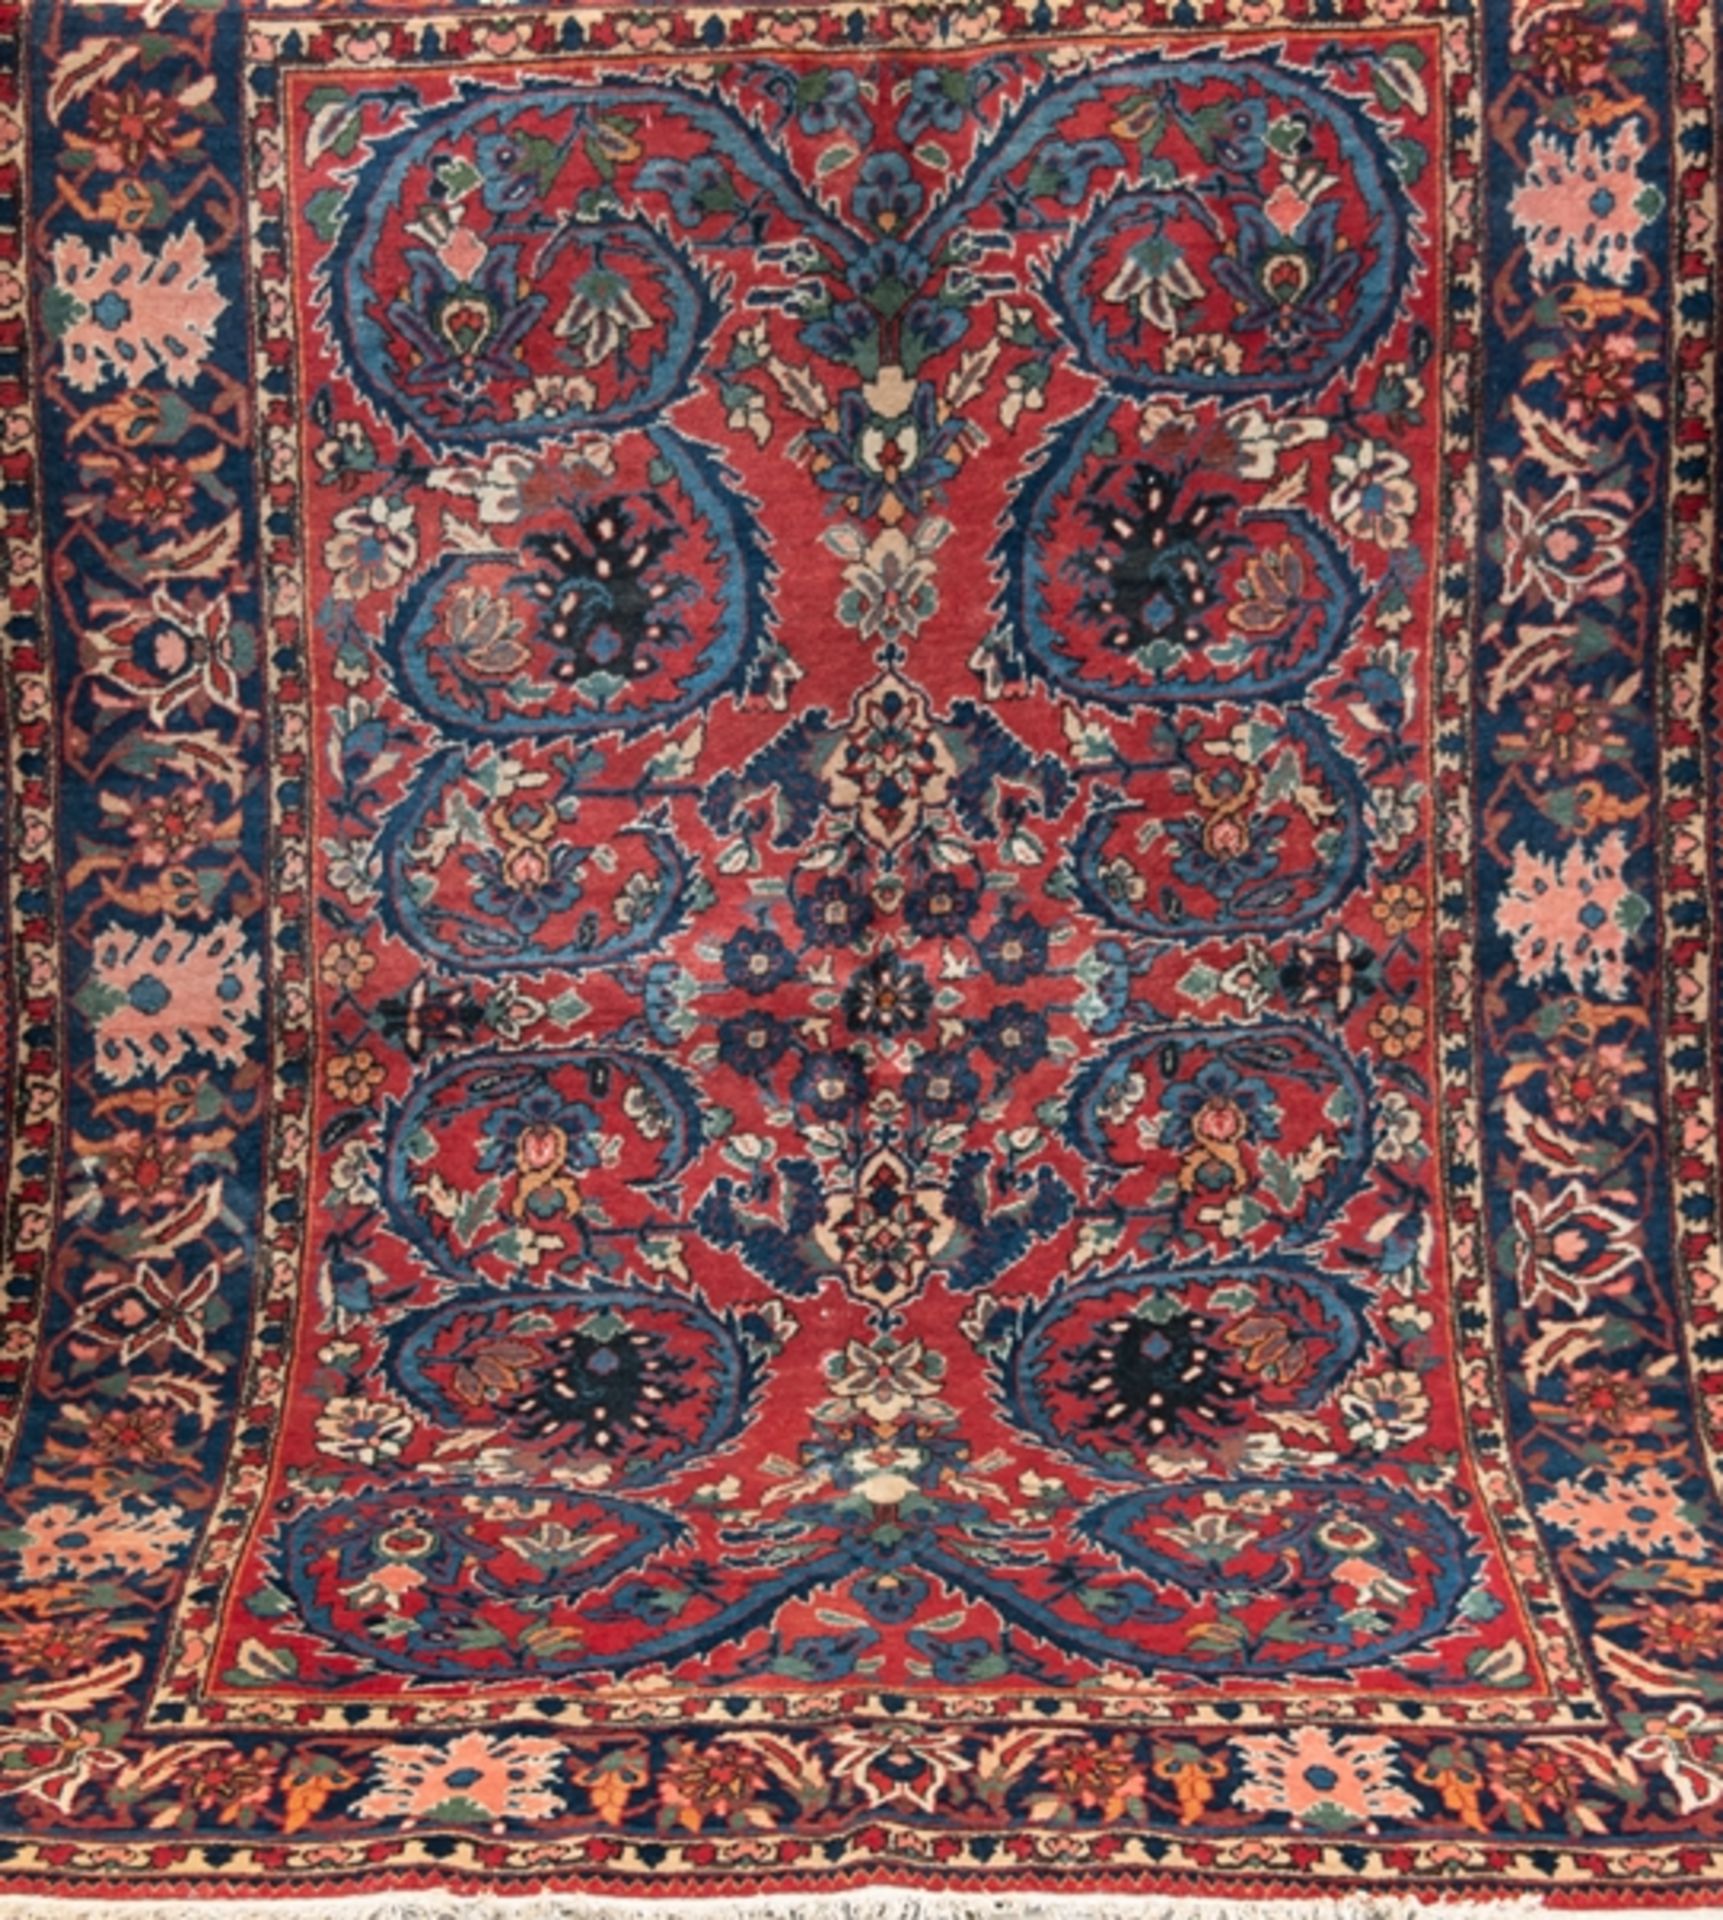 Bachtiar, Persien, rot-/ blaugrundig, durchgehendes Muster, Fransen gekürzt, 144x217 cm